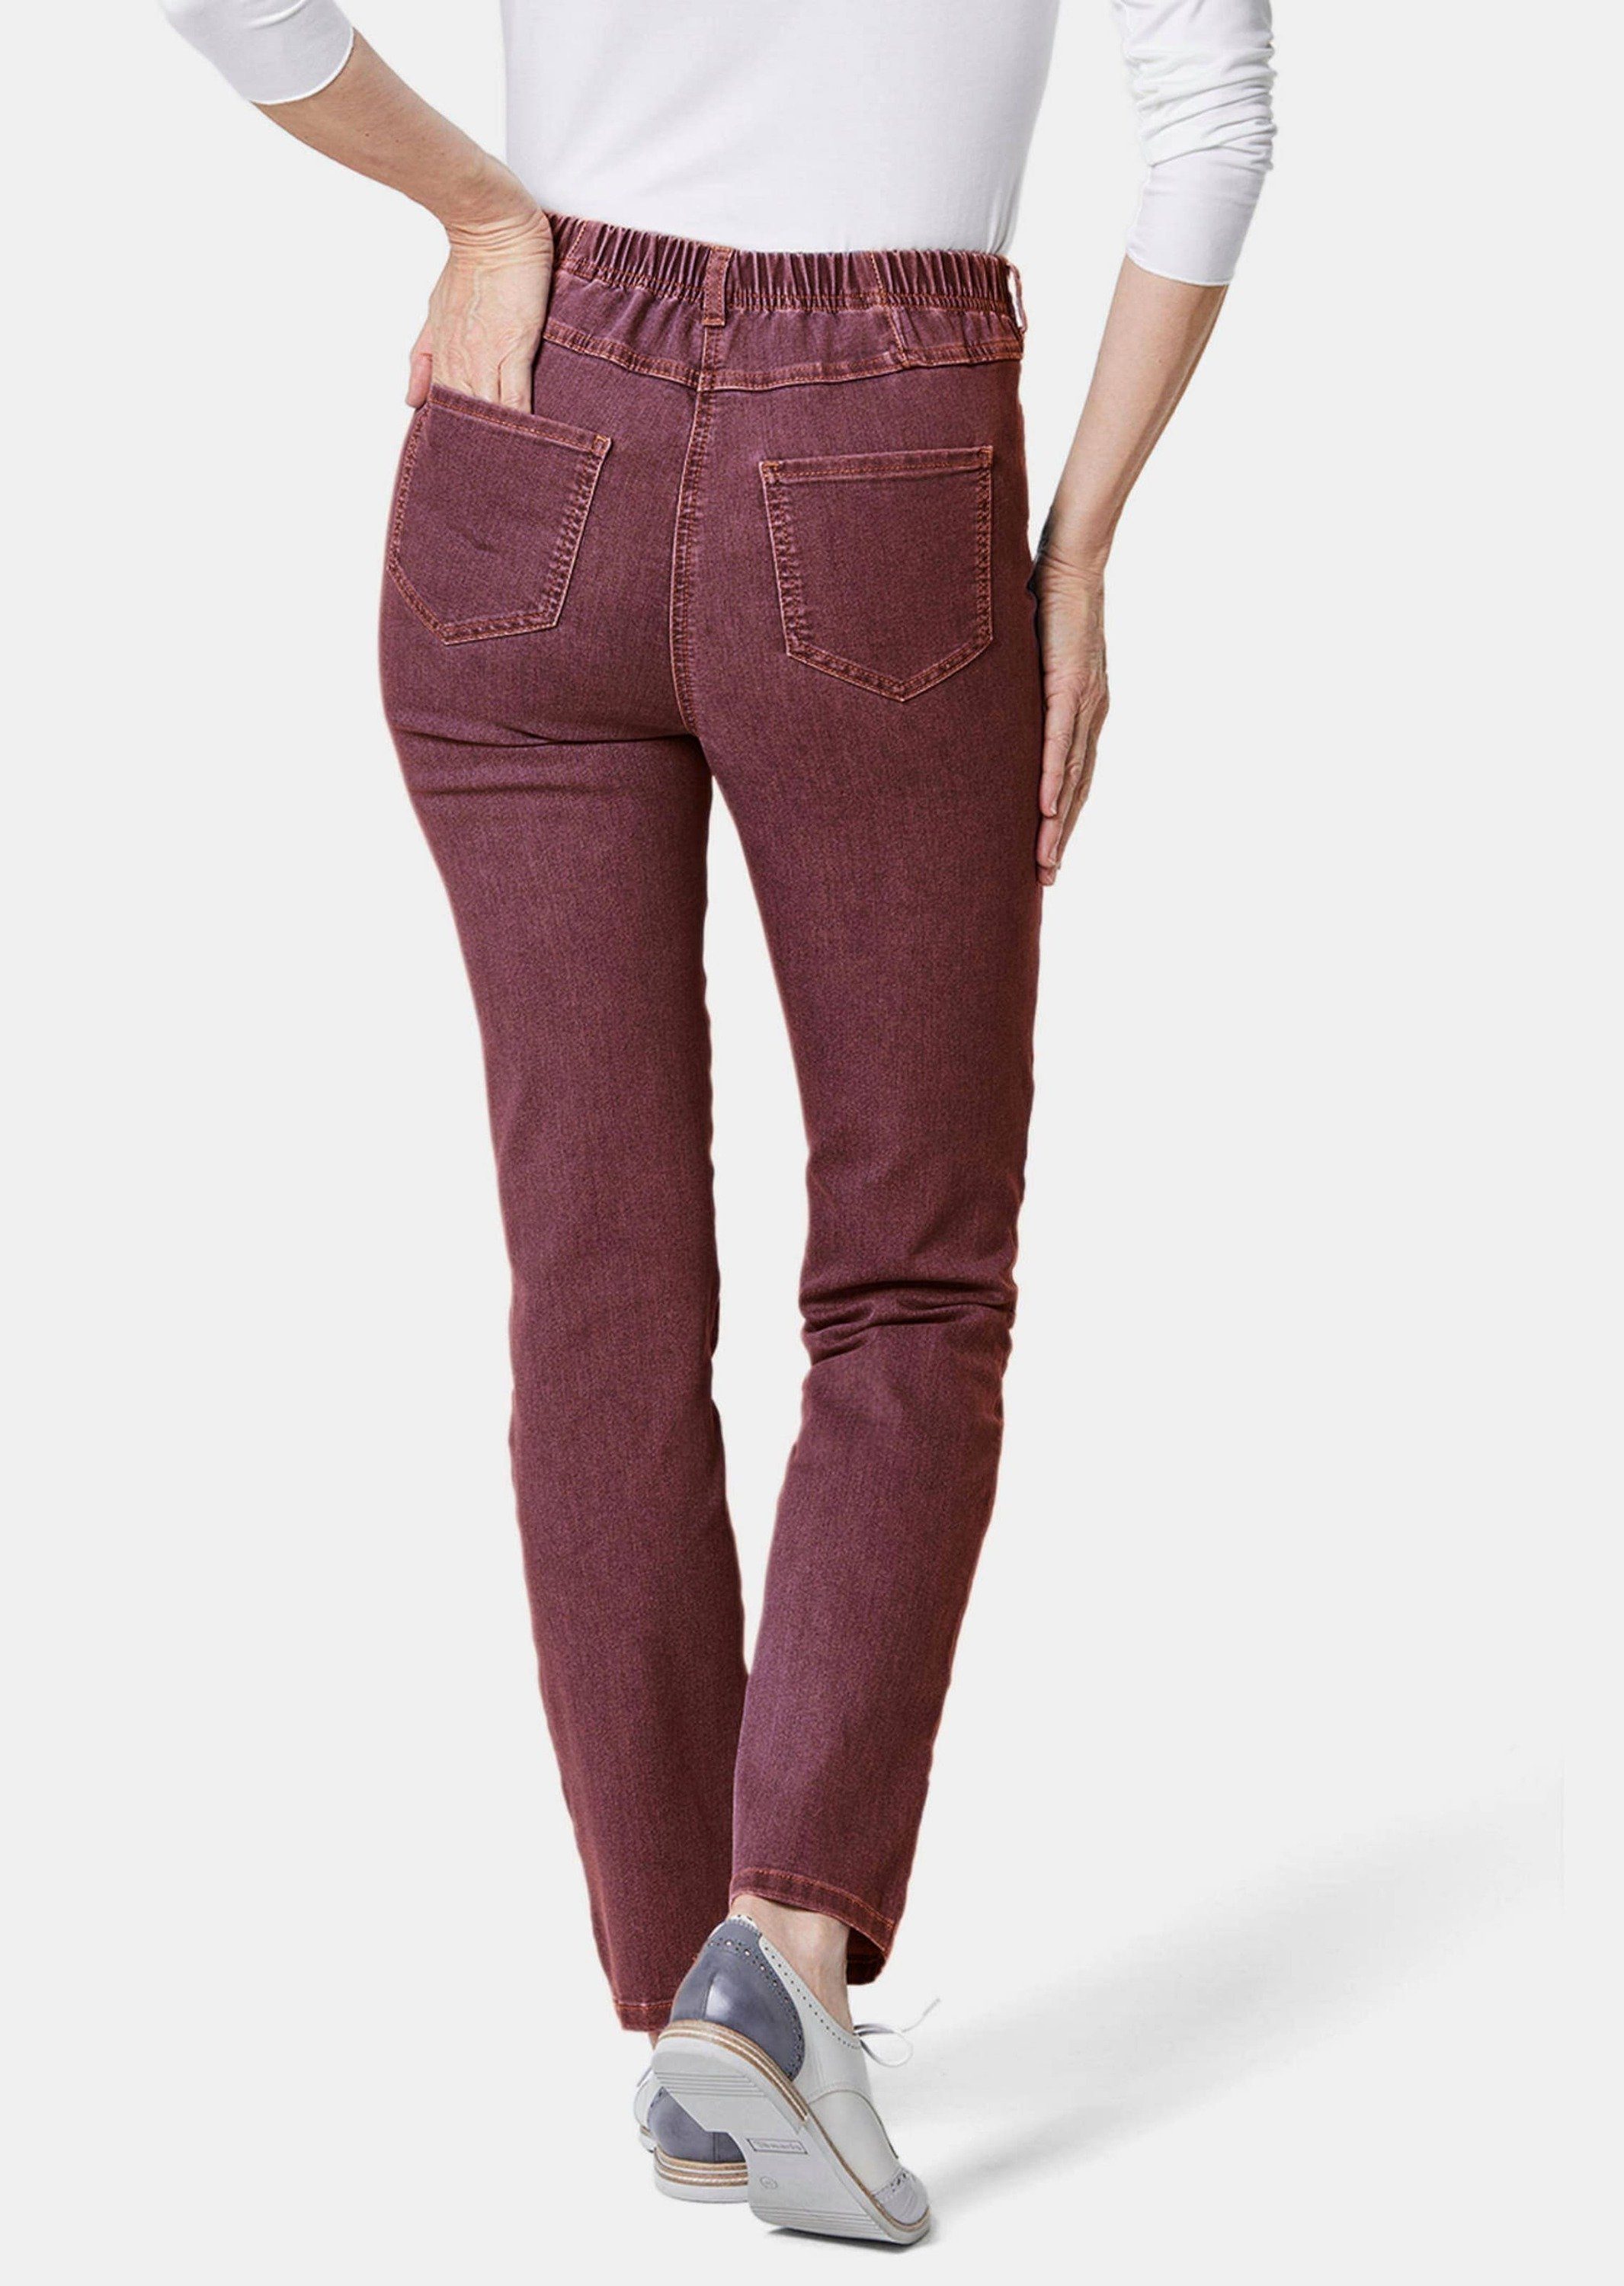 GOLDNER Bequeme Jeans High-Stretch-Jeanshose Kurzgröße: Bequeme rostbraun